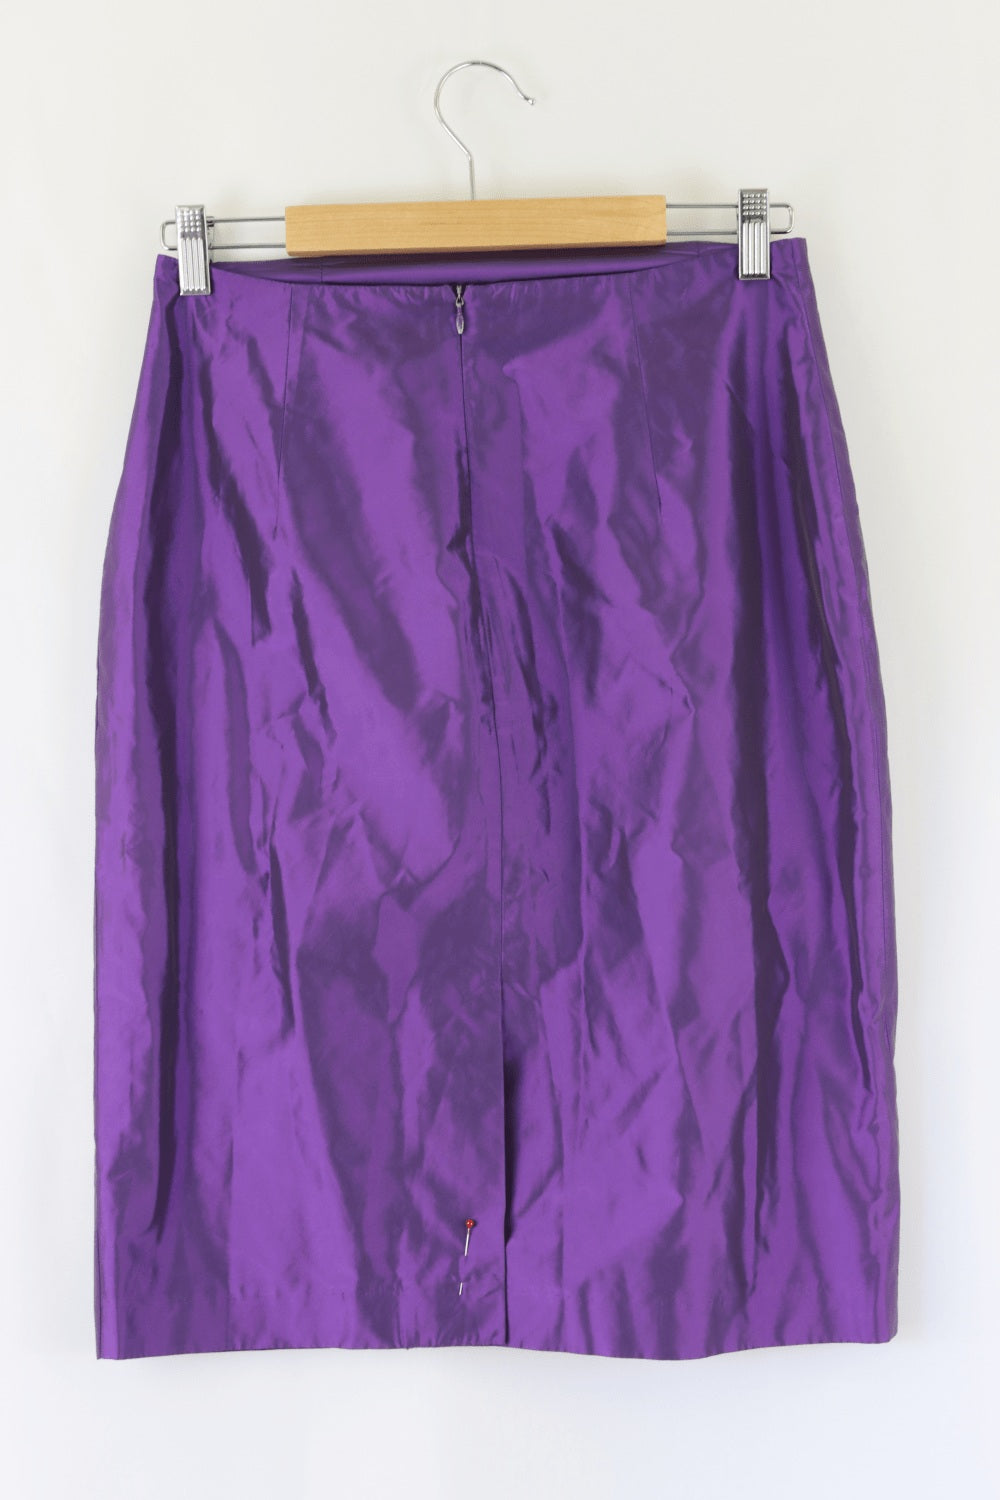 Carla Zampati Purple Skirt 8